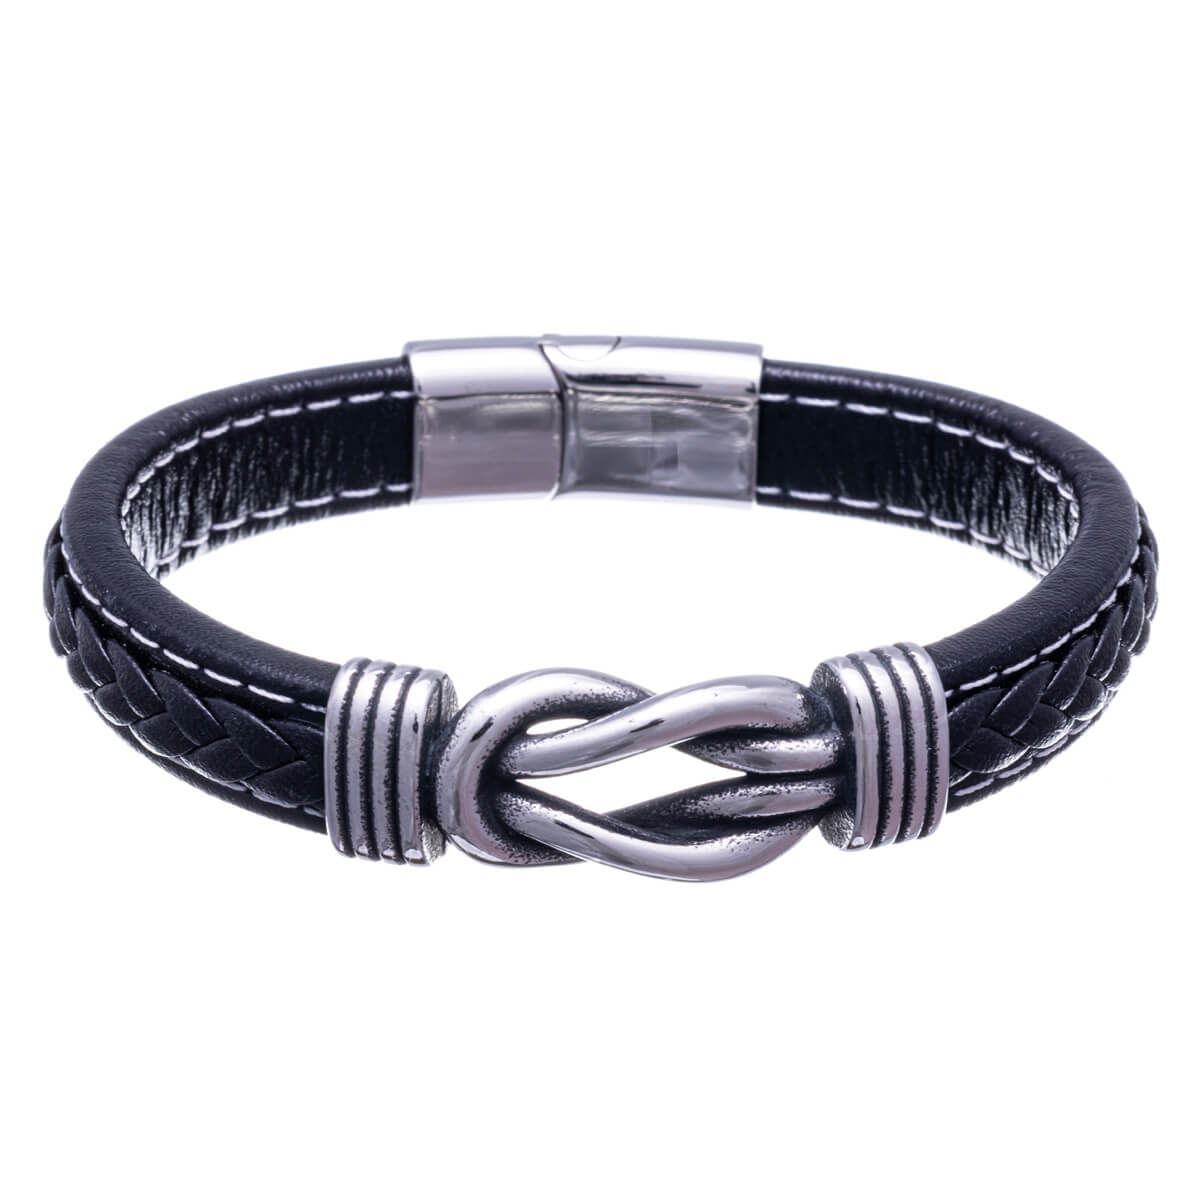 Artificial leather bracelet with knot decoration 22,5cm (Steel 316L)